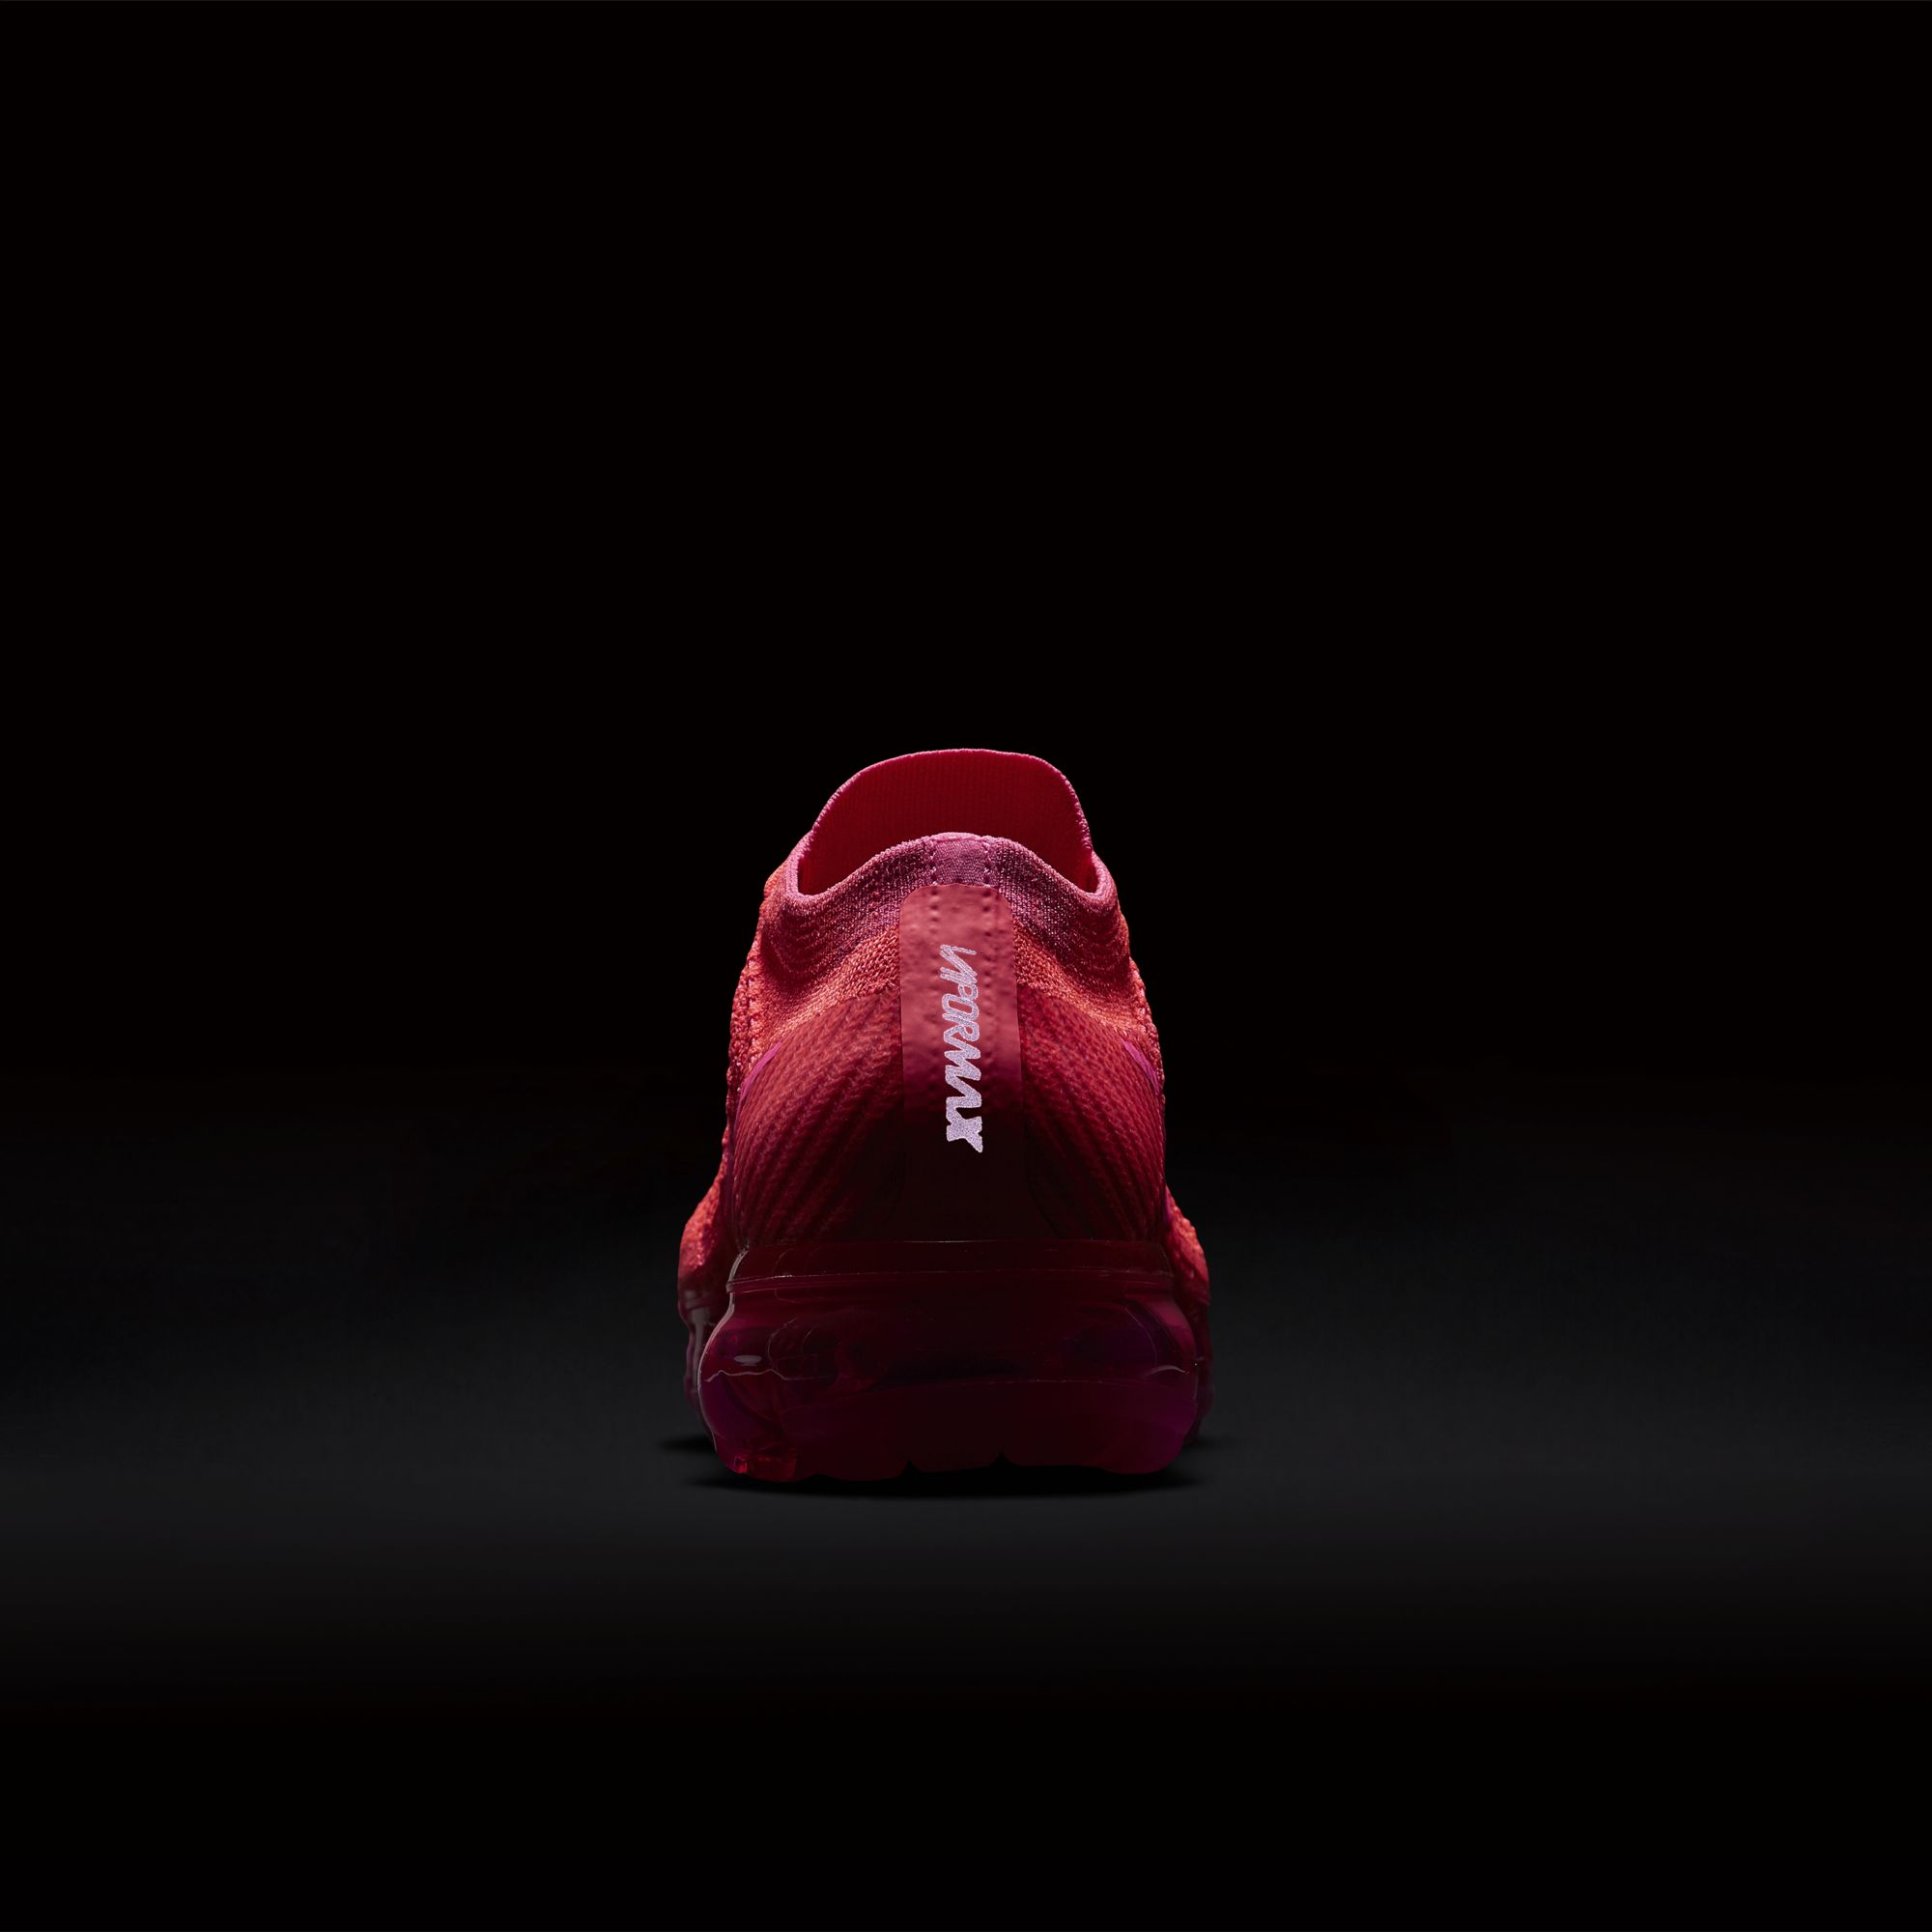 Nike Air VaporMax Bright Crimson/Hot Pink